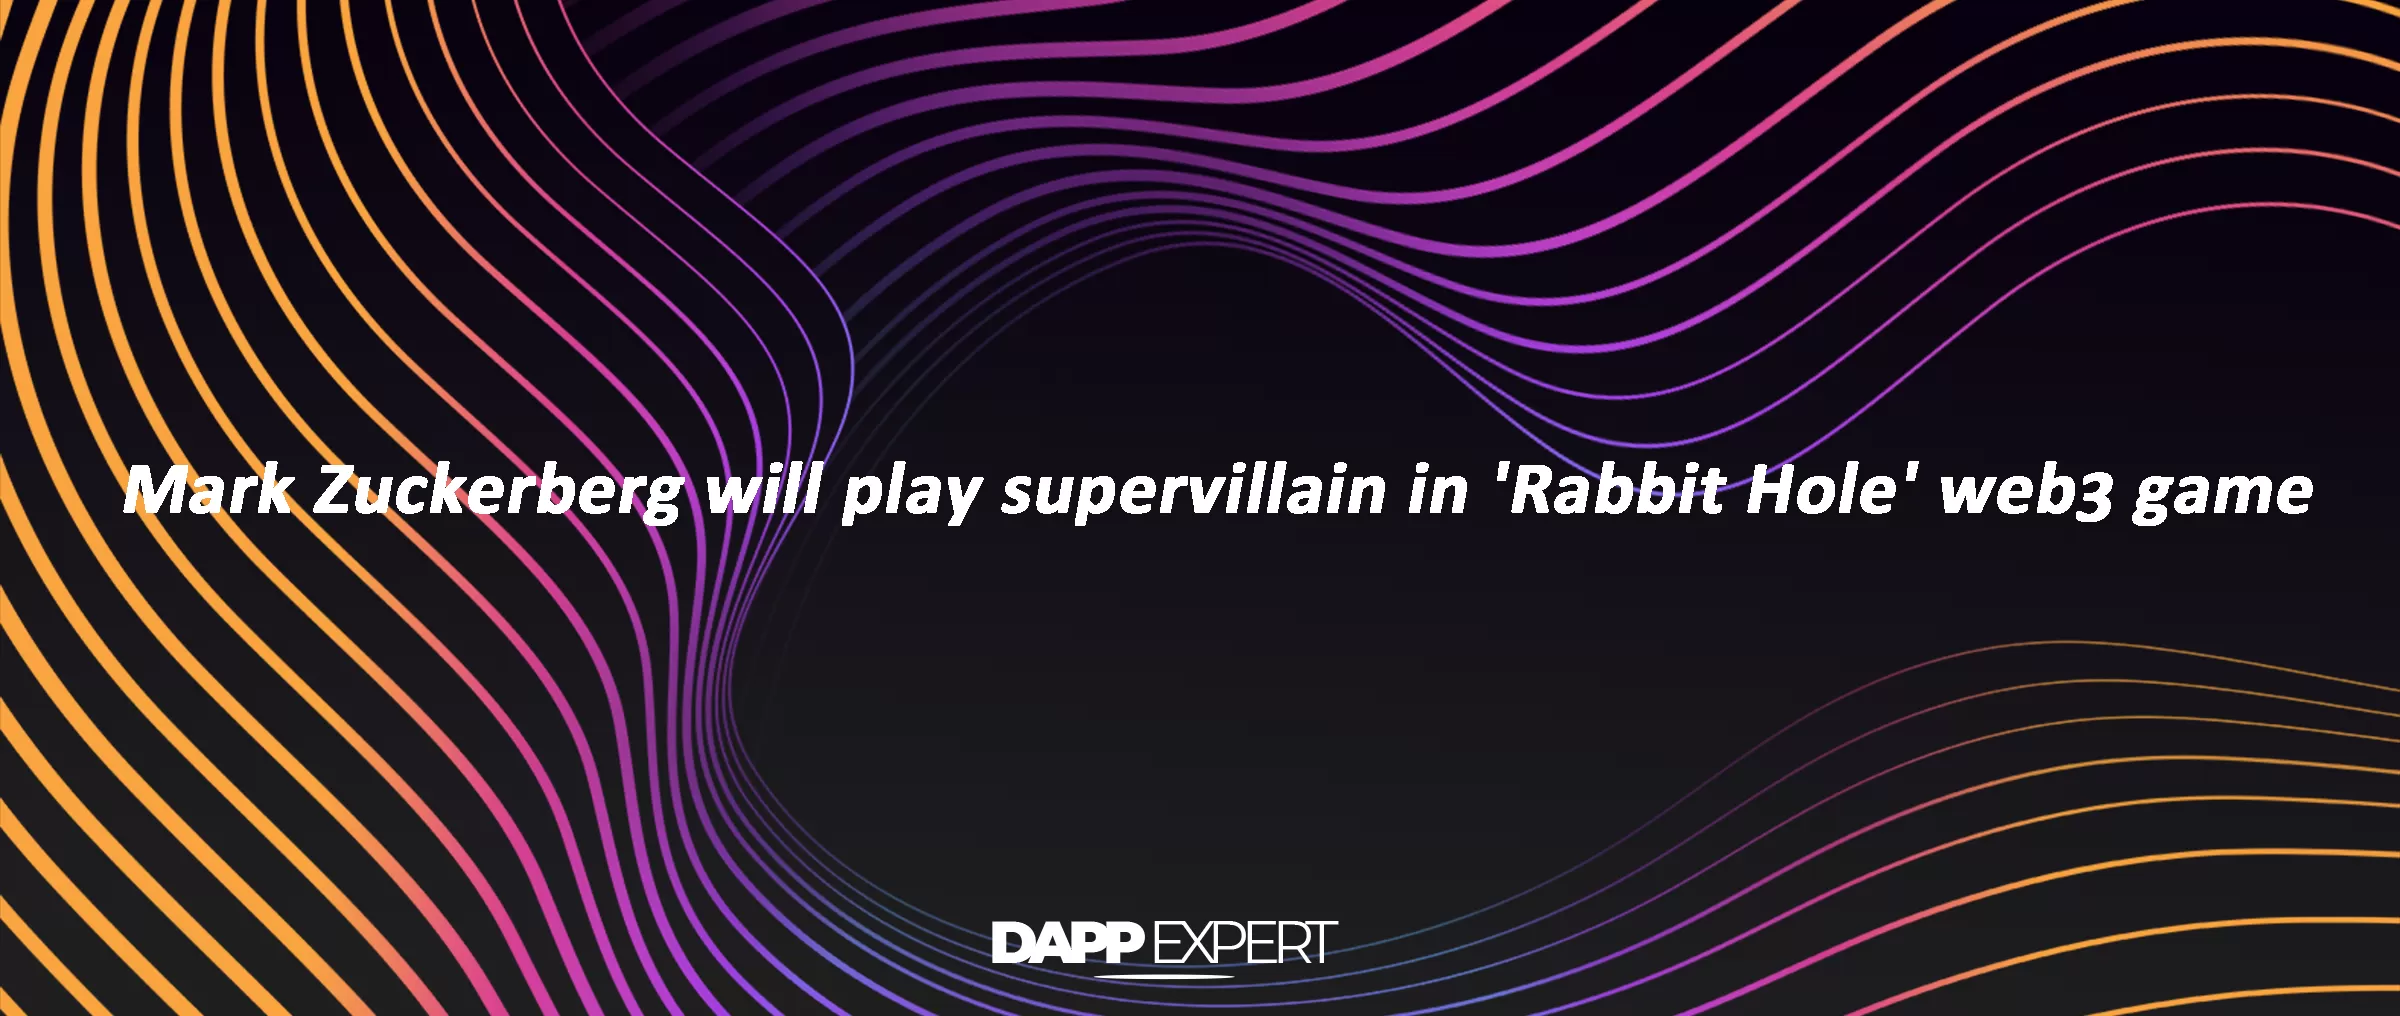 Mark Zuckerberg will play supervillain in 'Rabbit Hole' web3 game